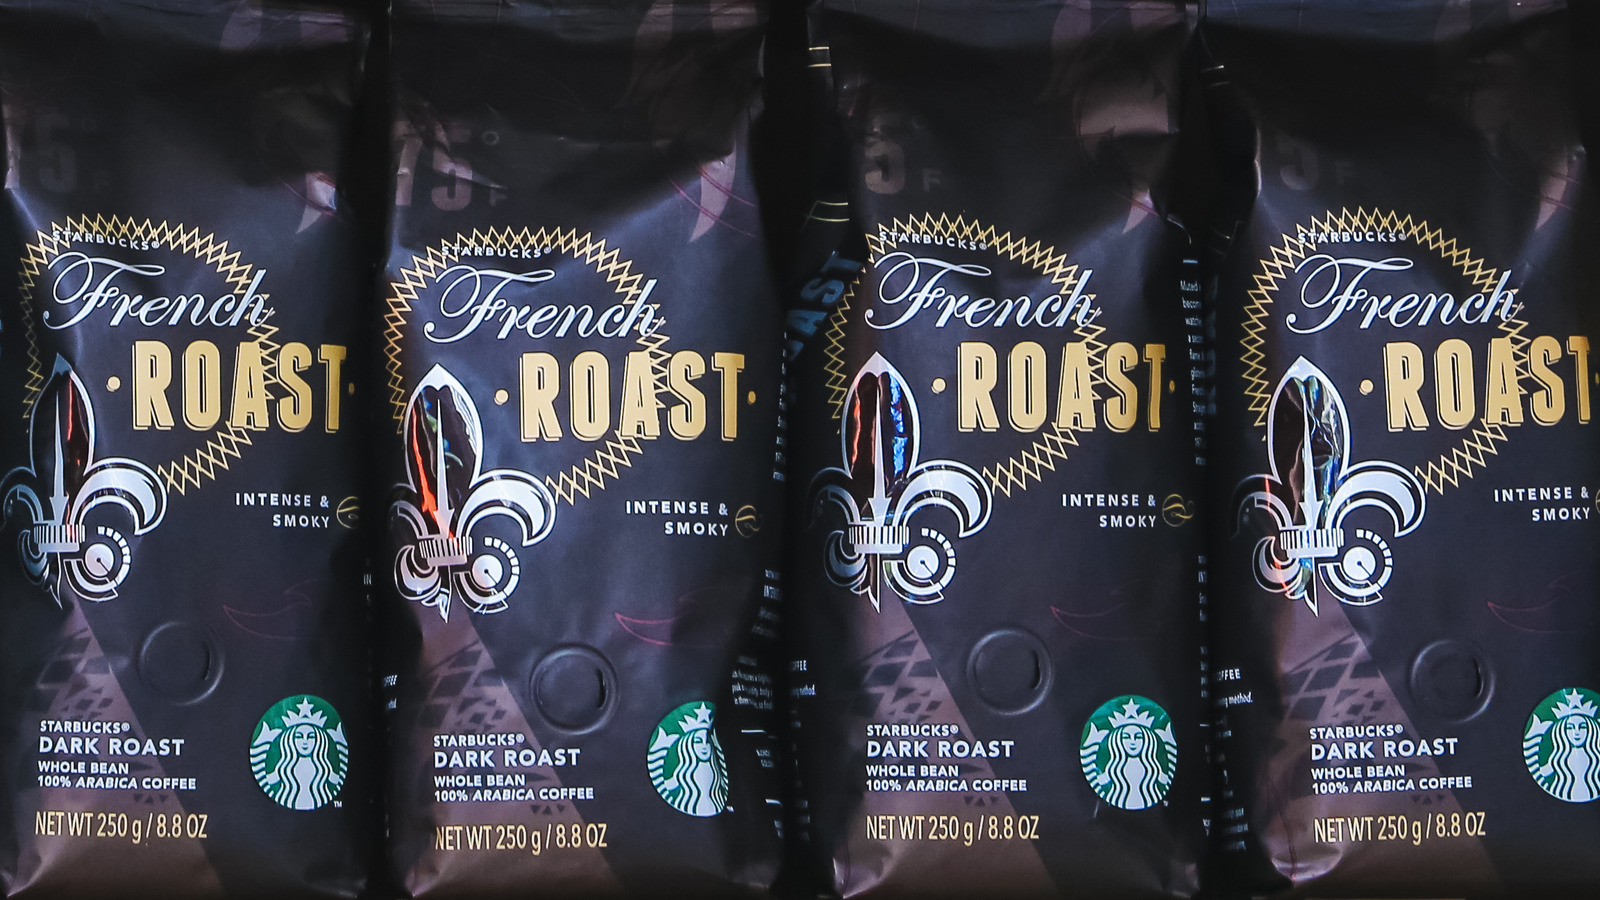 Starbucks® Dark Roast